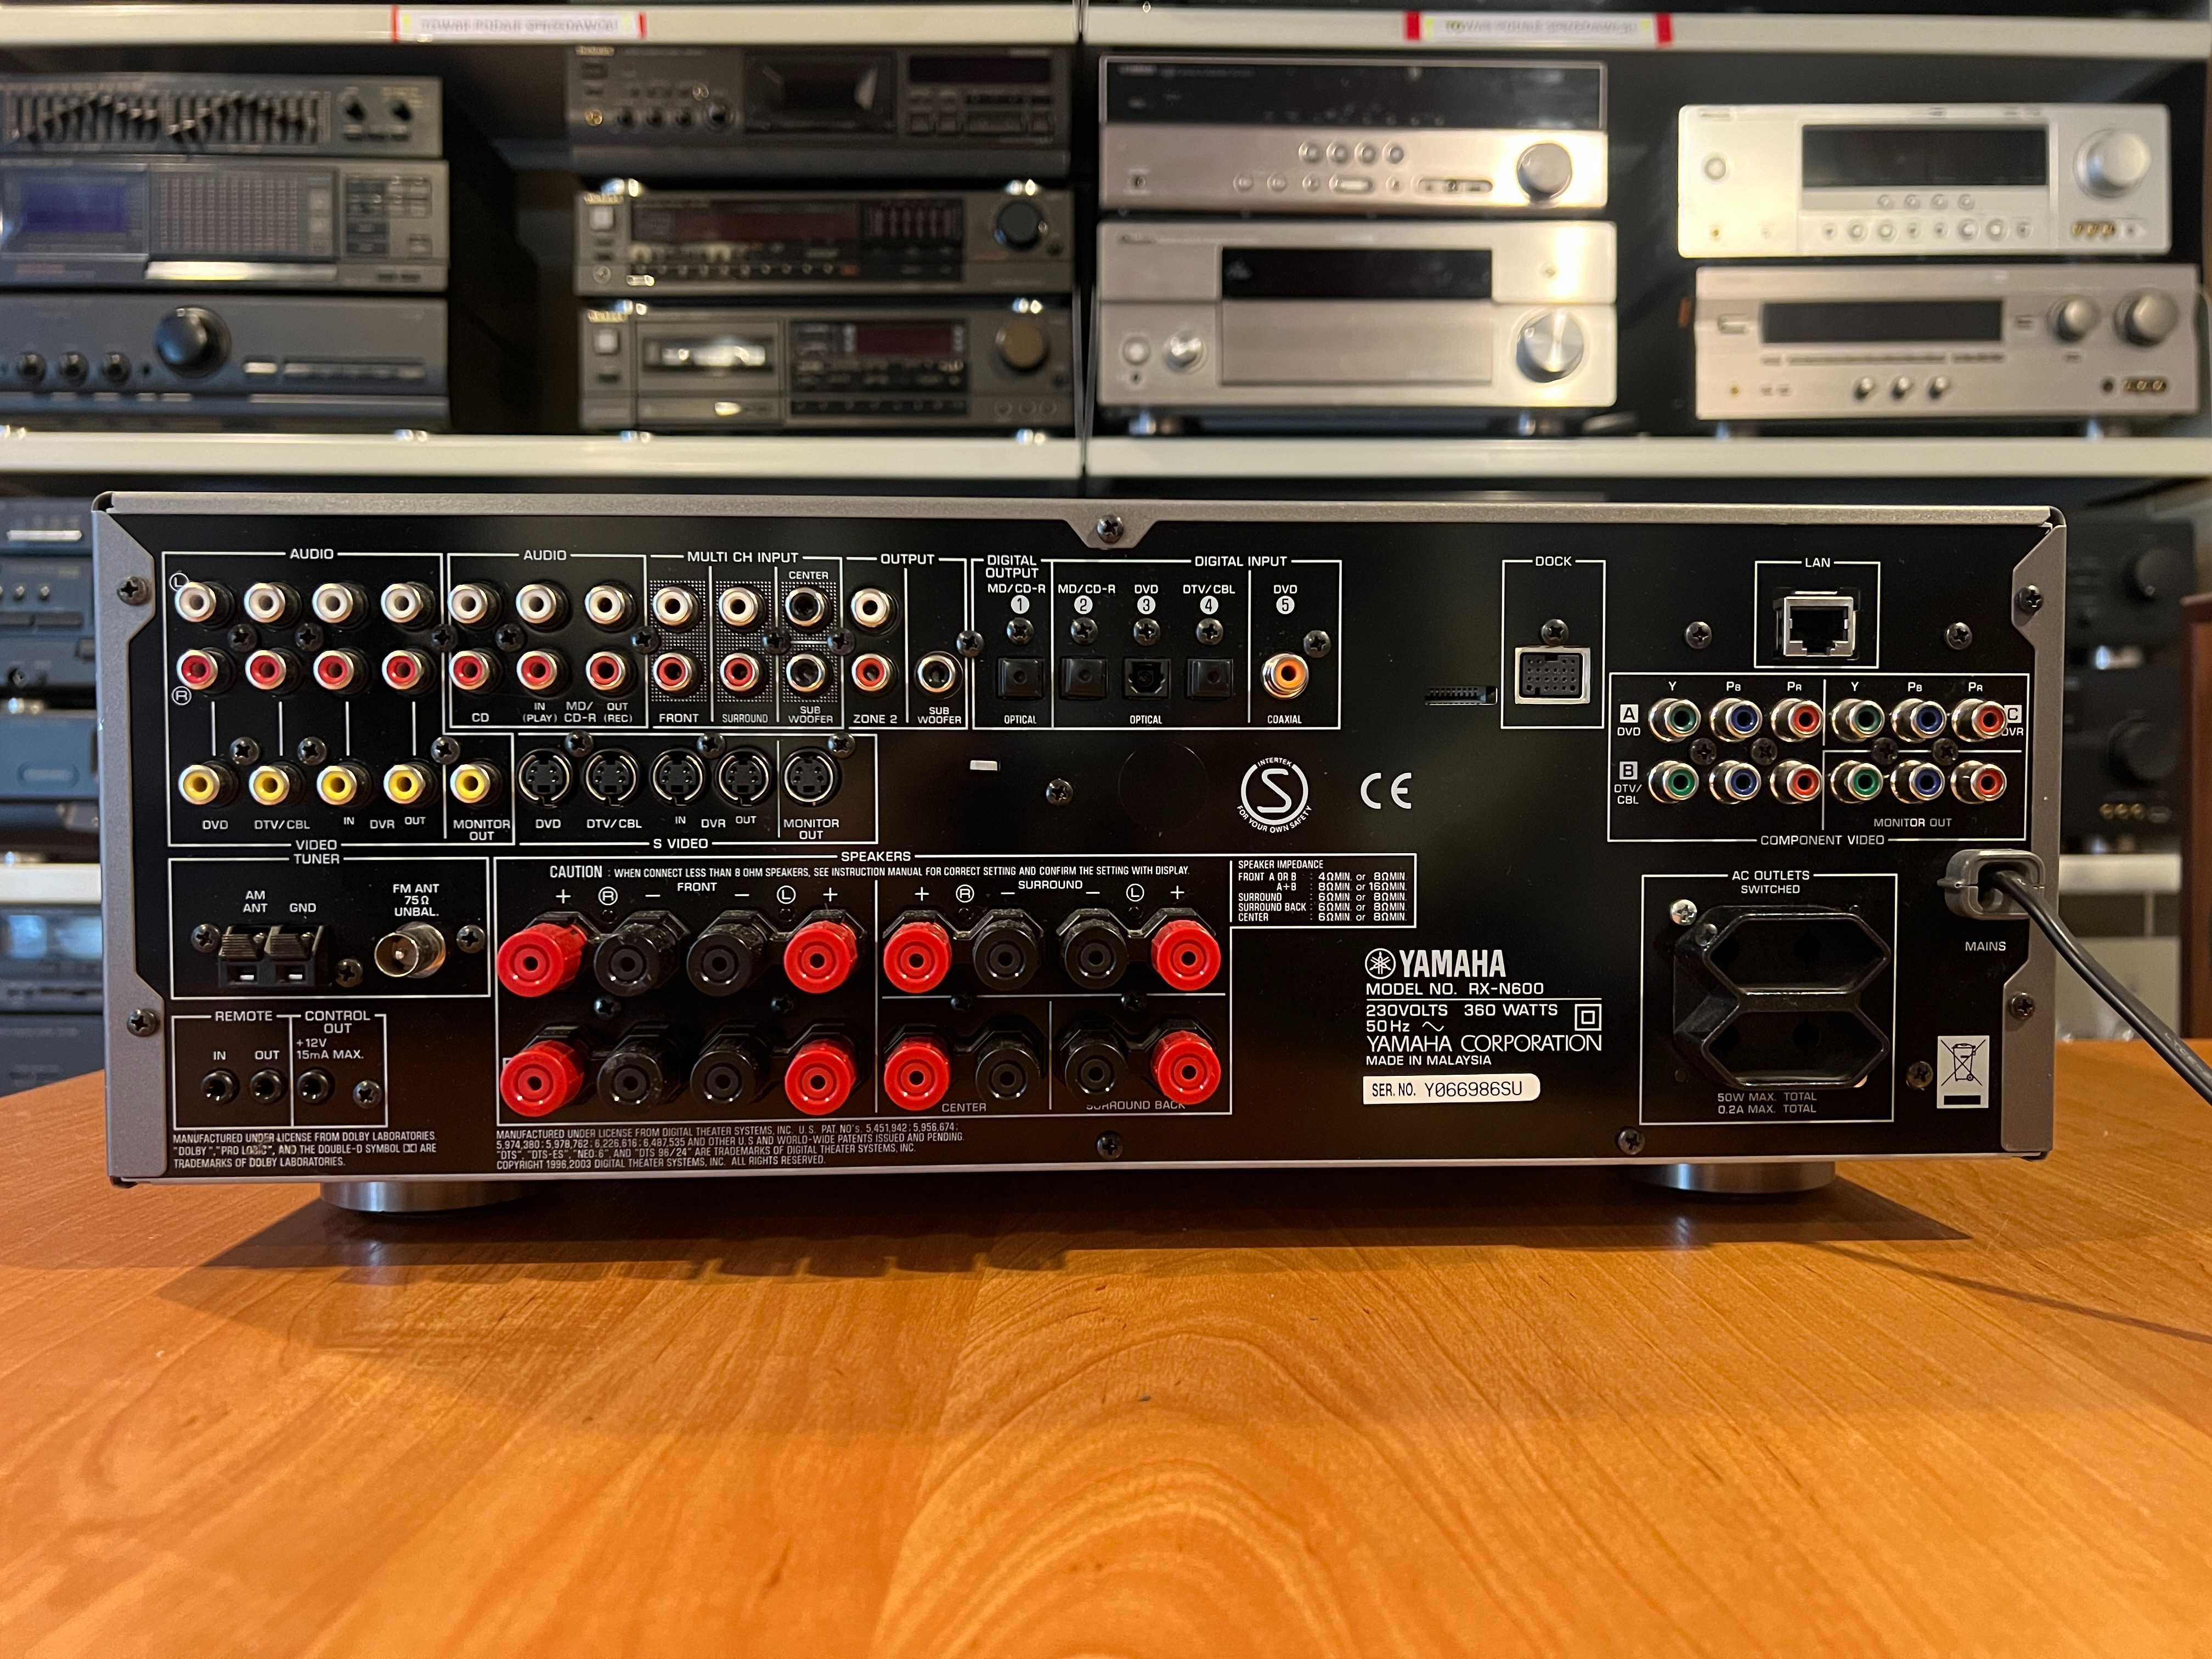 Amplituner Yamaha RX-N600 (USB, LAN) Audio Room